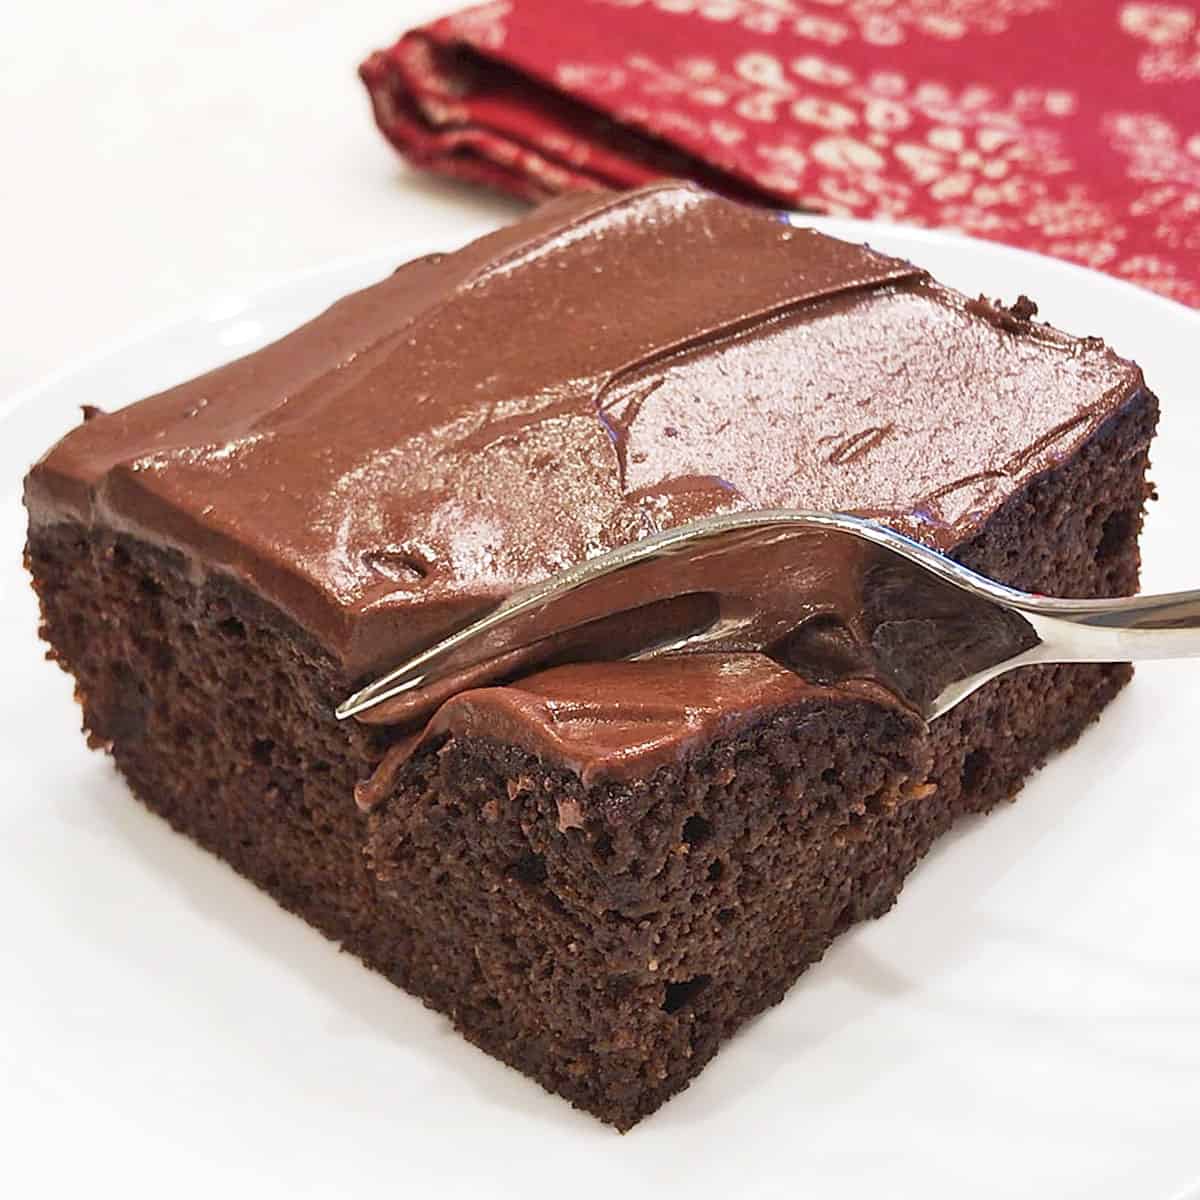 A slice of keto chocolate cake. 